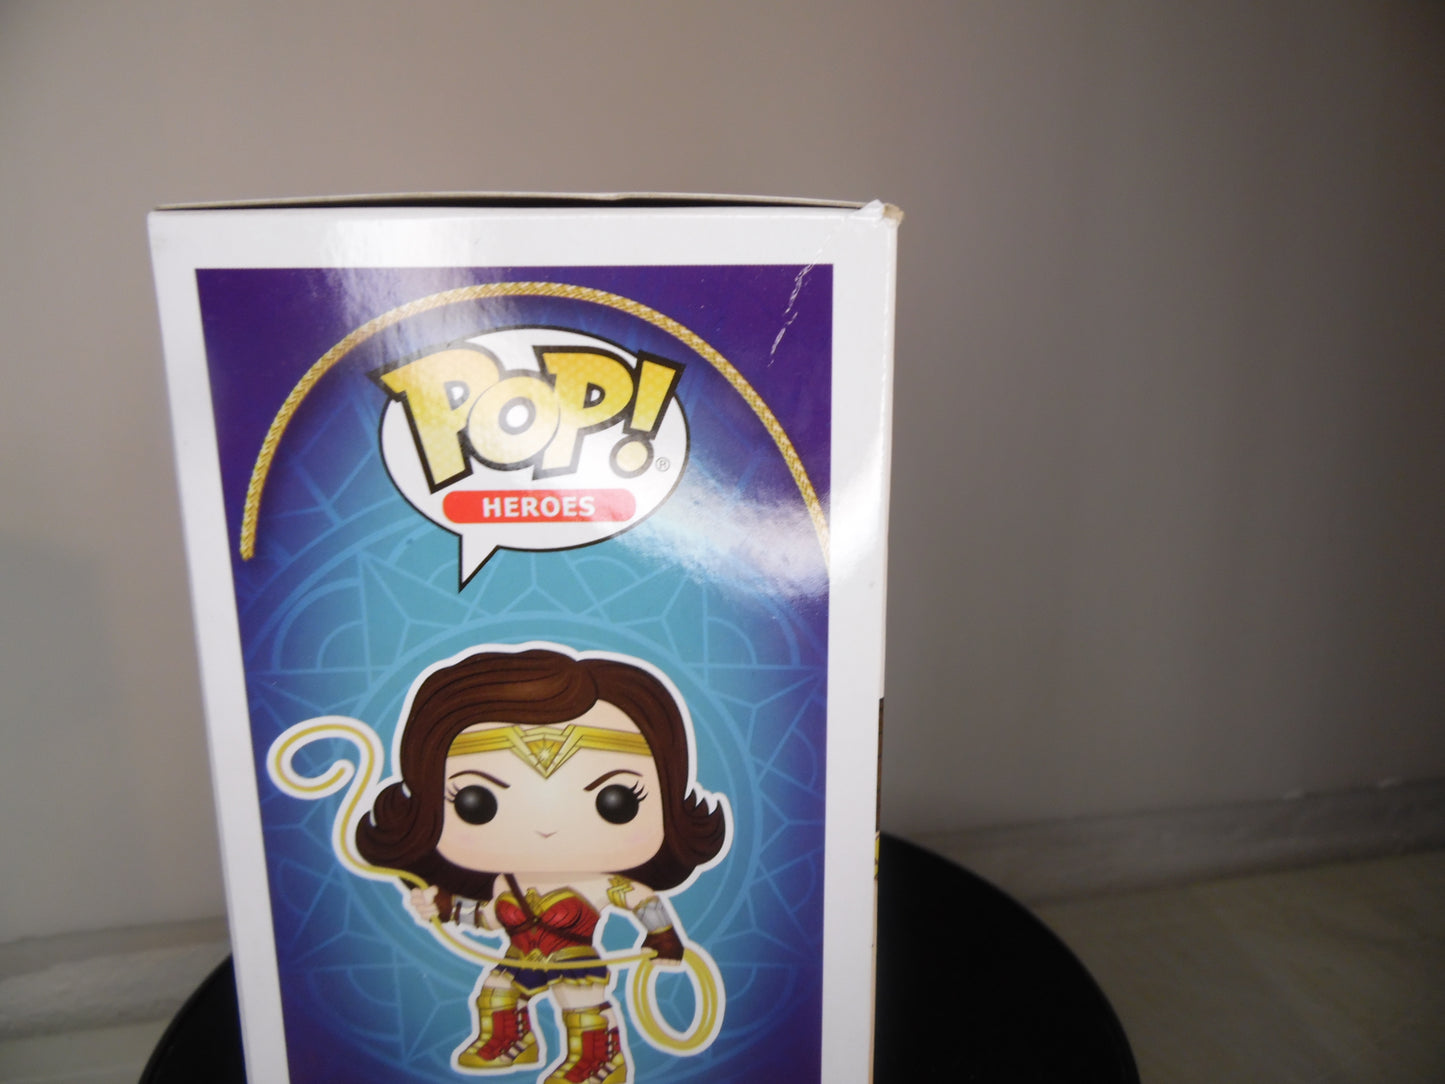 Funko Pop! Wonder Woman DC Legion Of Collectors  #181